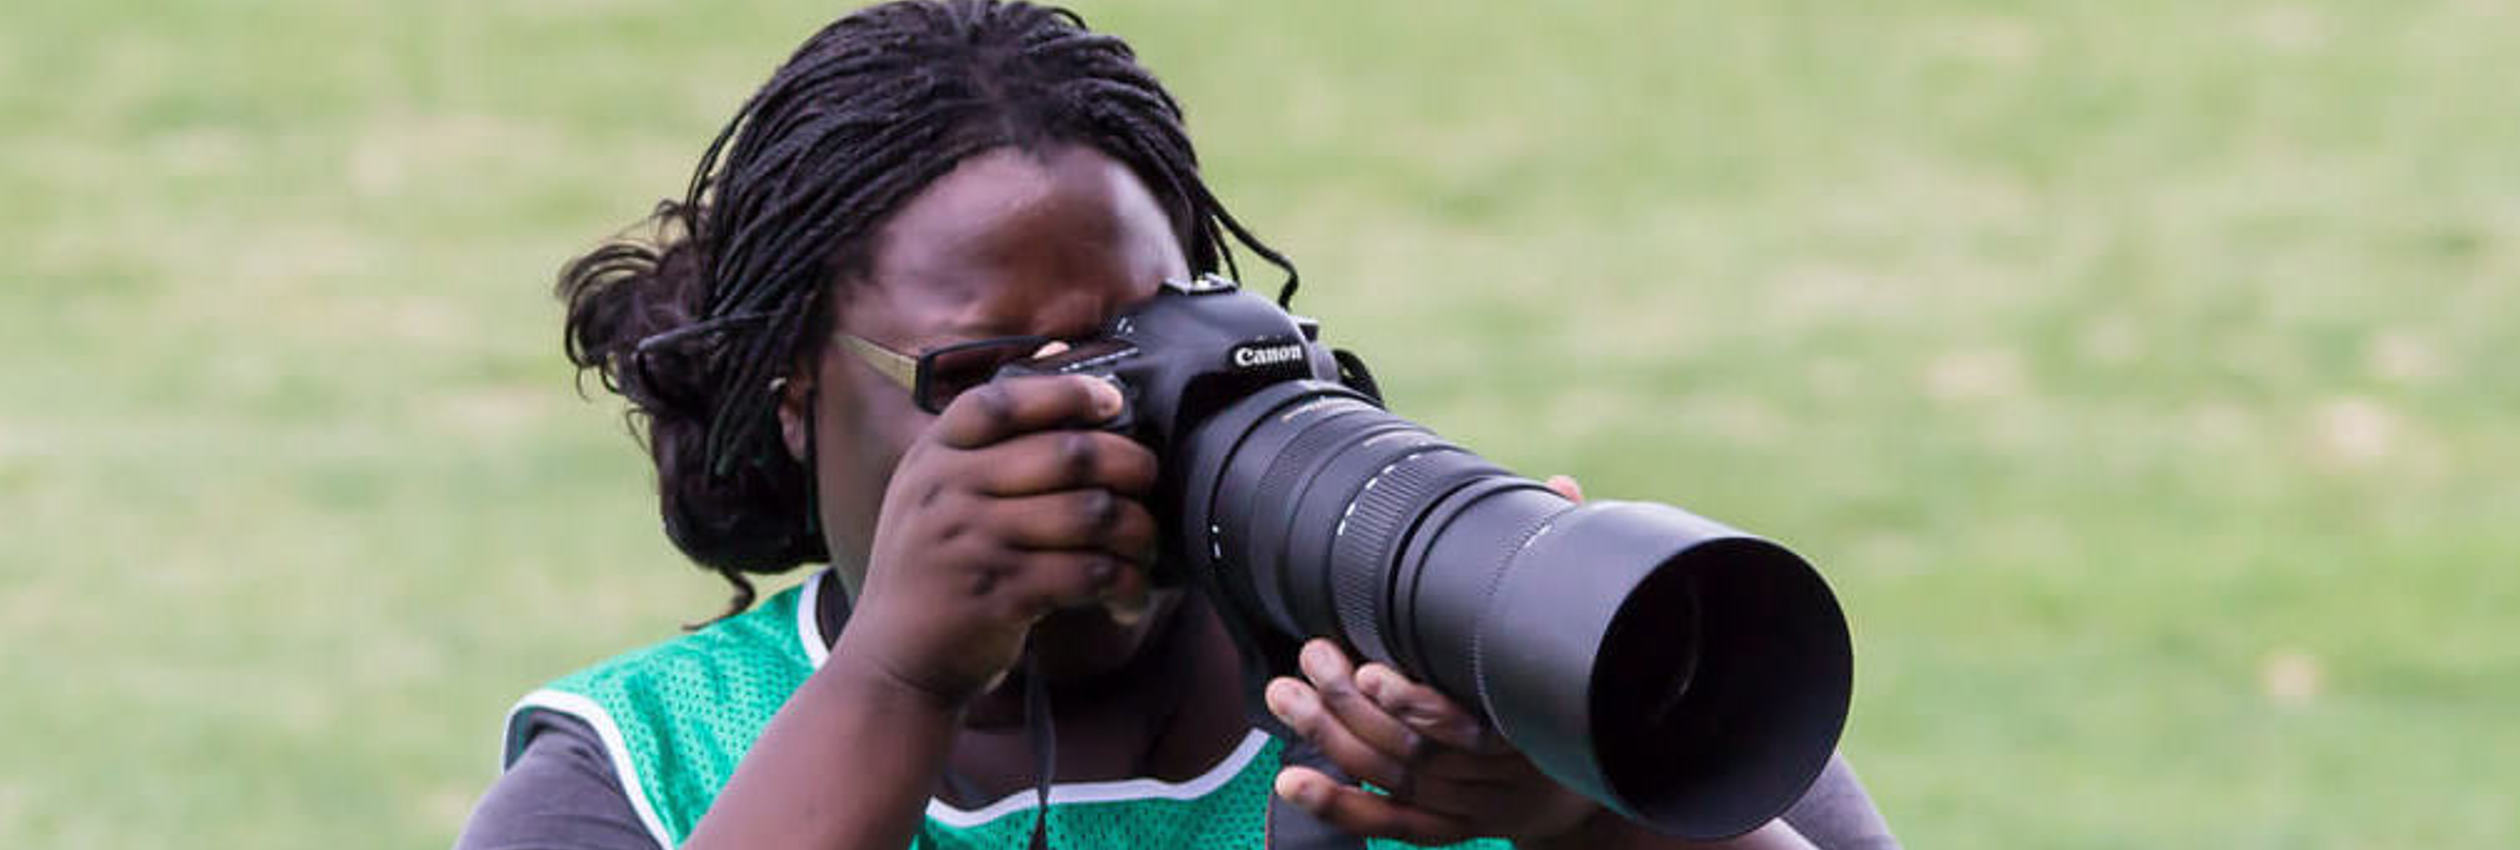 Australian sports journalist Ann Odong takes photos at a sports field